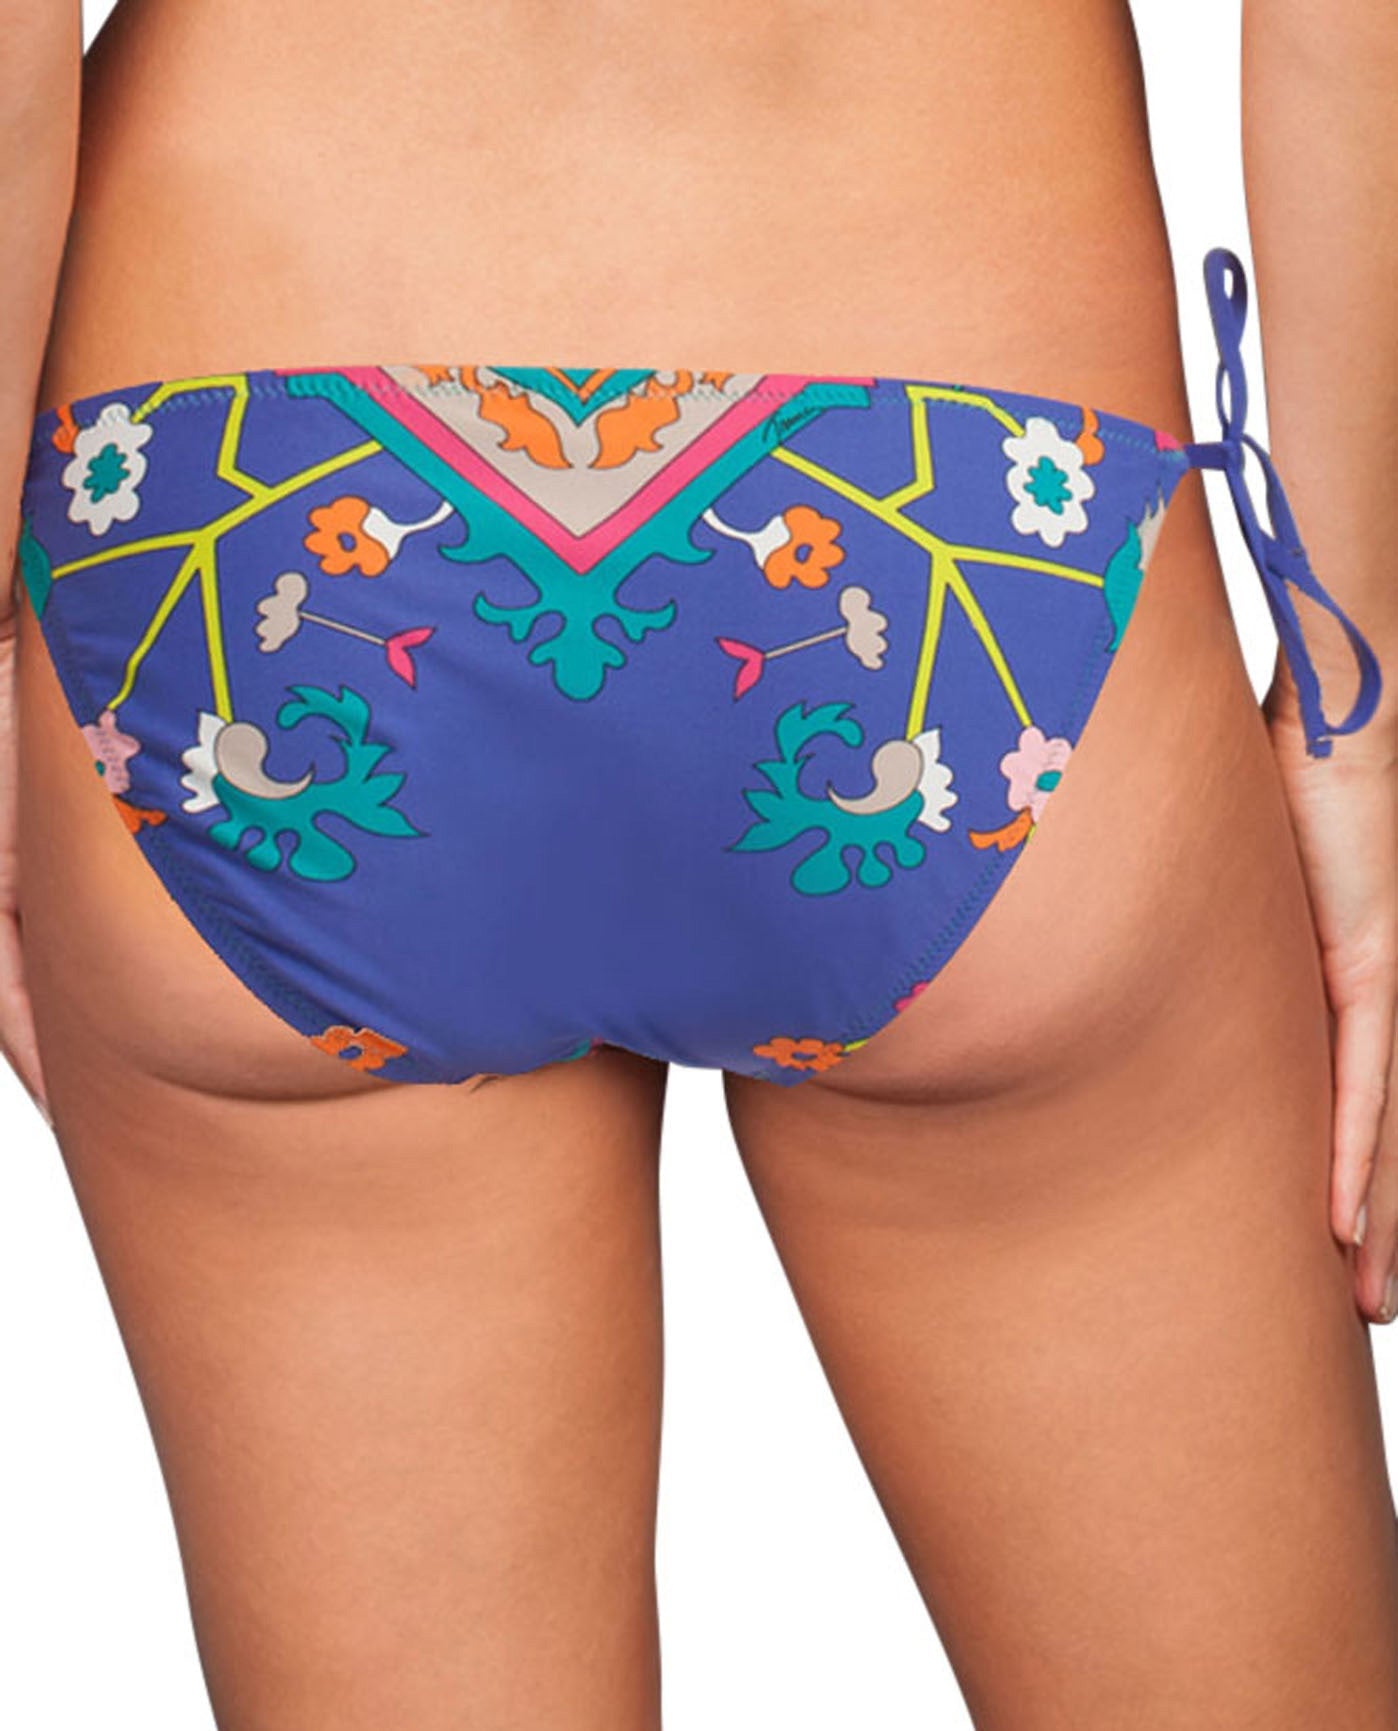 Back View Of Trina Turk Tapestry Tie Side Hipster Bikini Bottom | TTK TAPESTRY